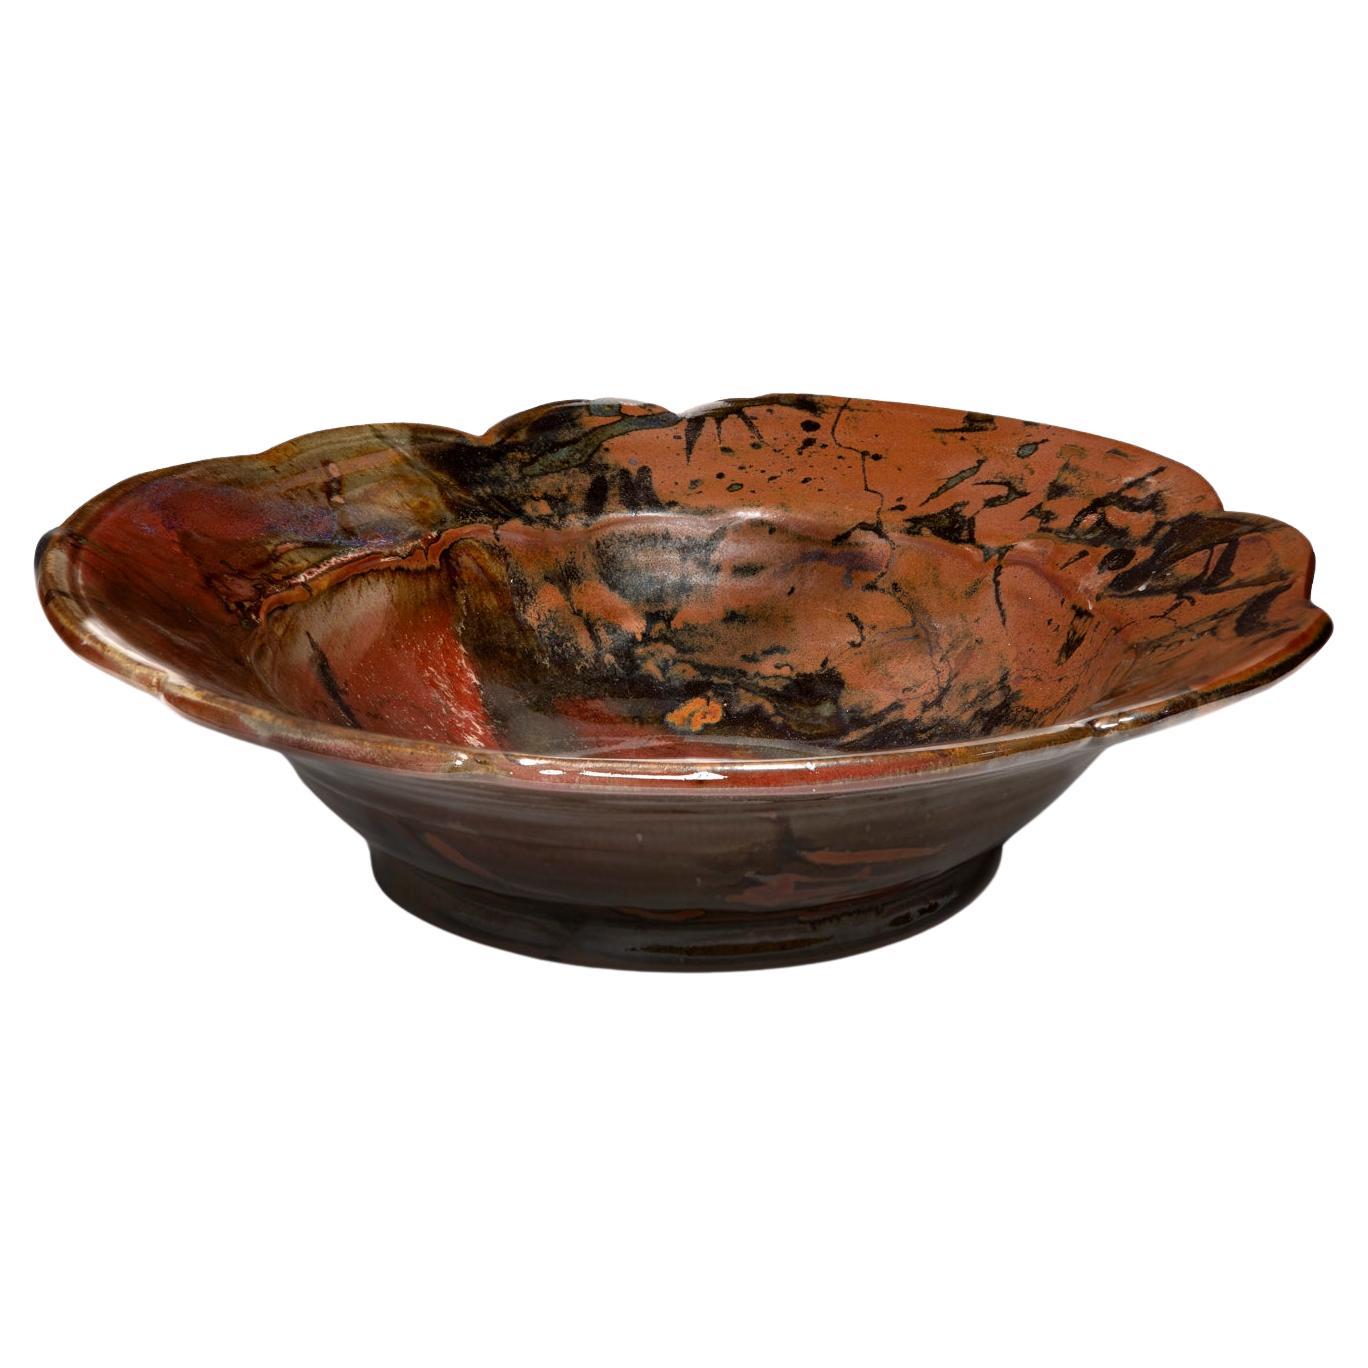 John Glick Plum Street Pottery Keramik glasierte Schale/Schale/Charger Extragroß 